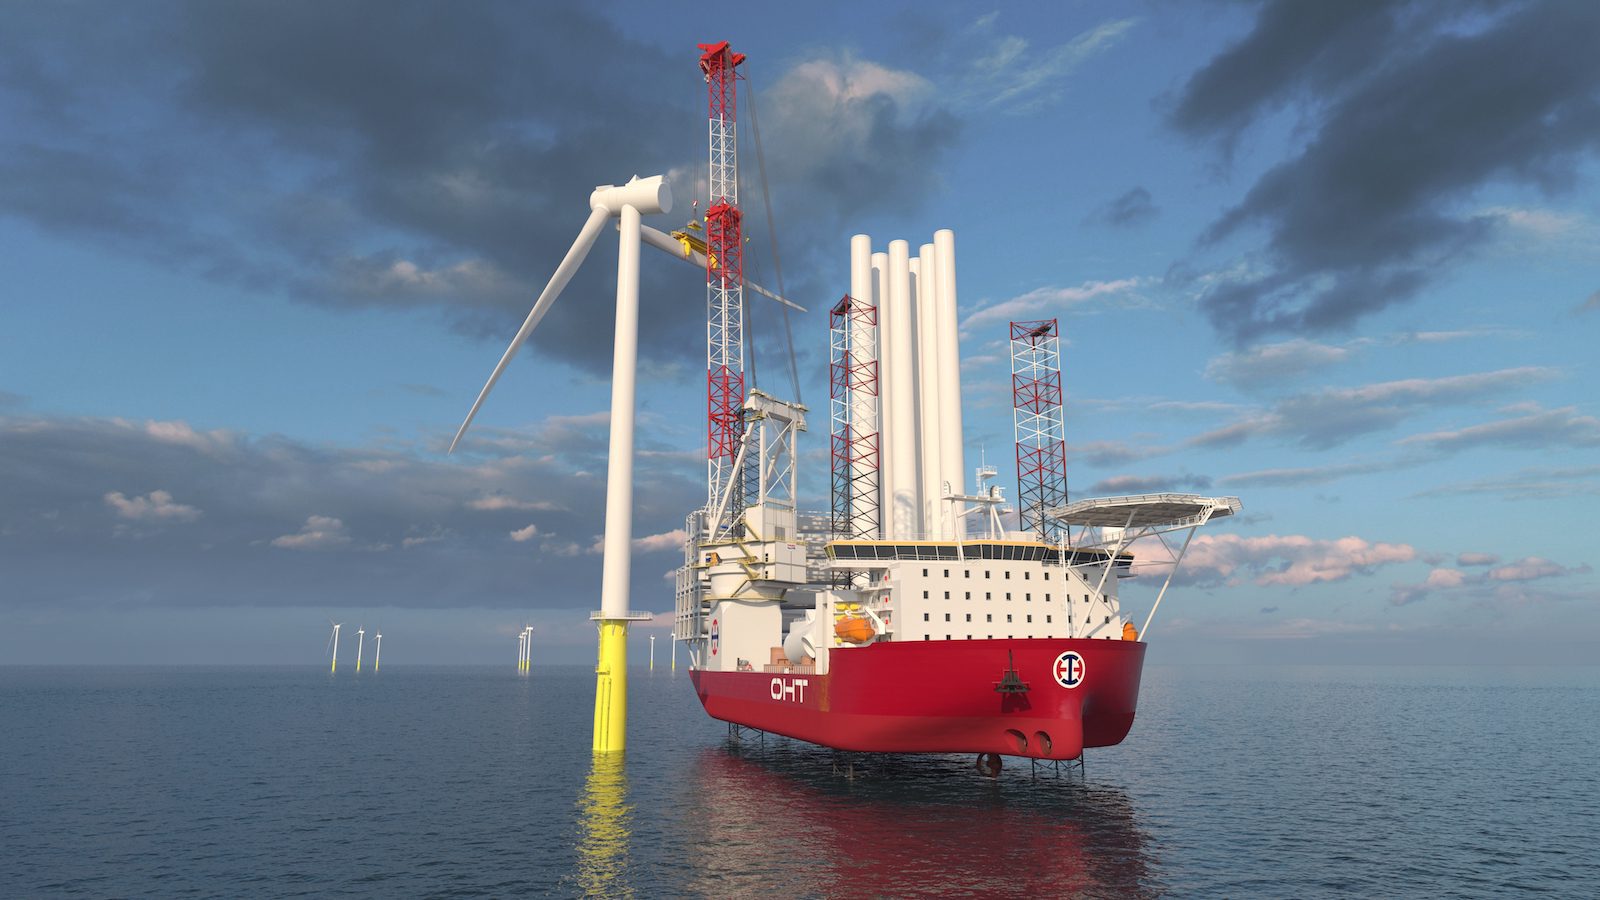 Broad scope of Wärtsilä solutions selected for OHT’s next-generation wind turbine installation vessel